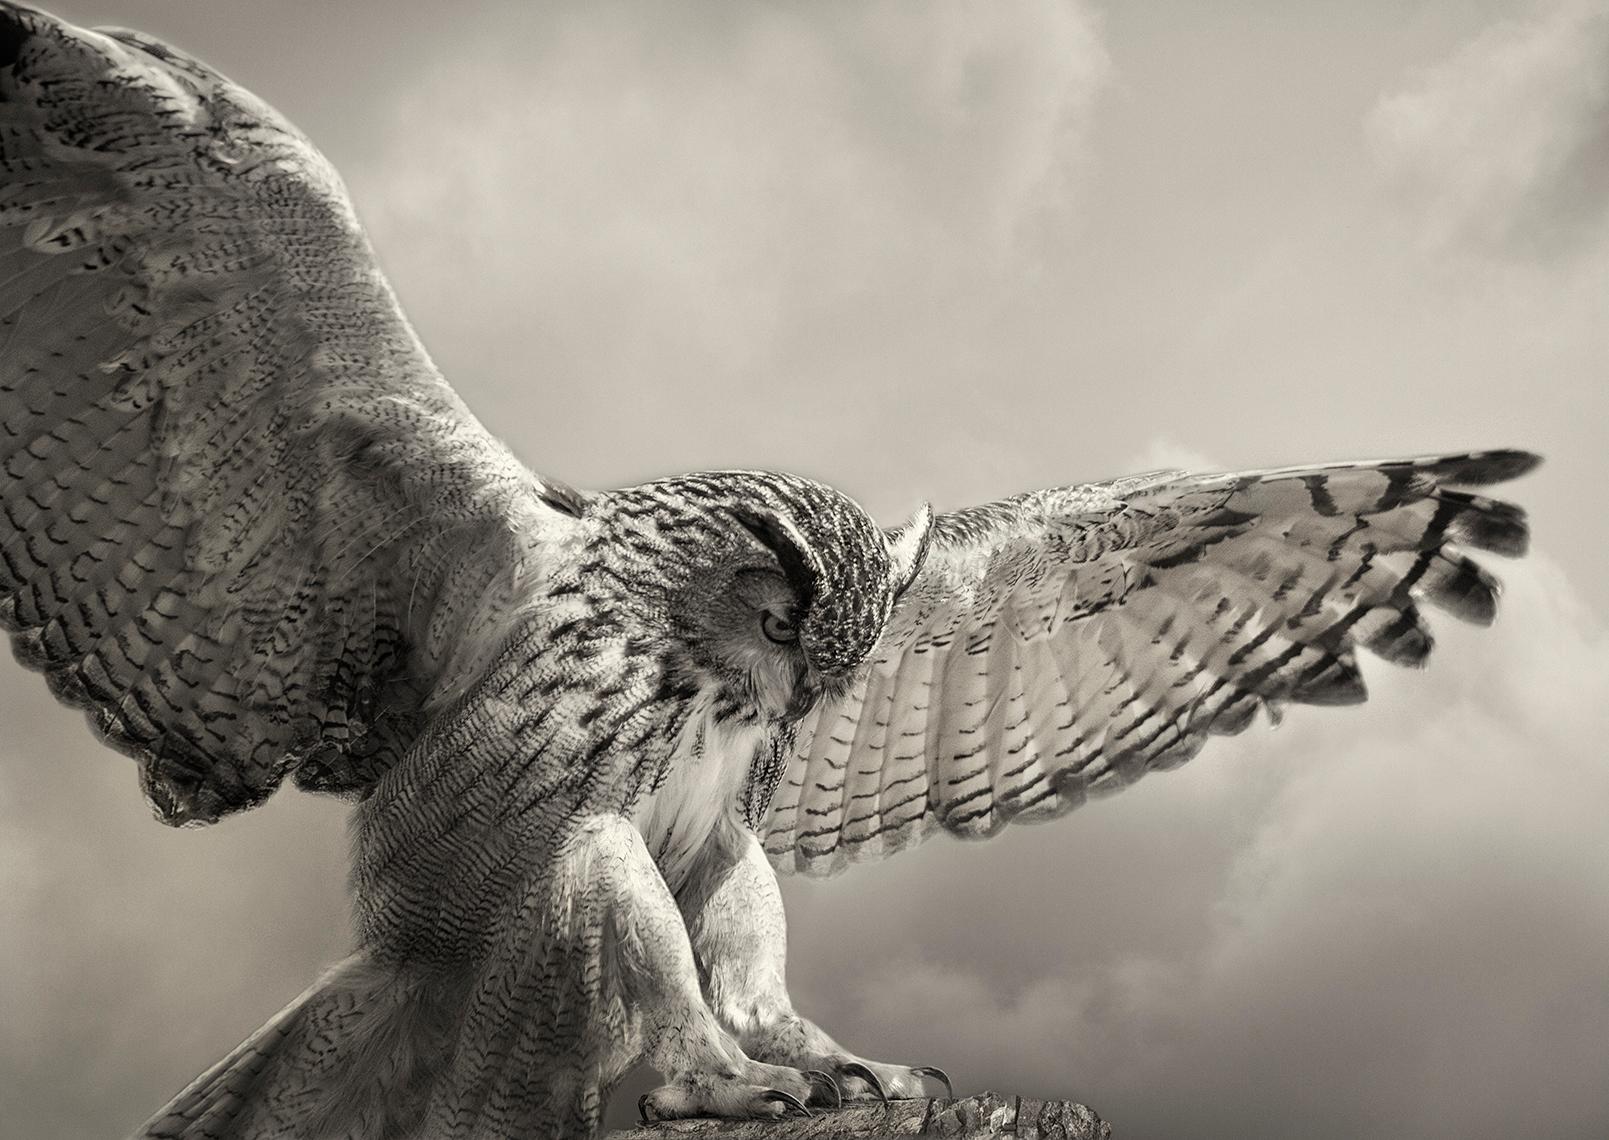 Beth Moon Black and White Photograph - Eagle Owl Landing, limited edition photograph, signed, Platinum/Palladium Print